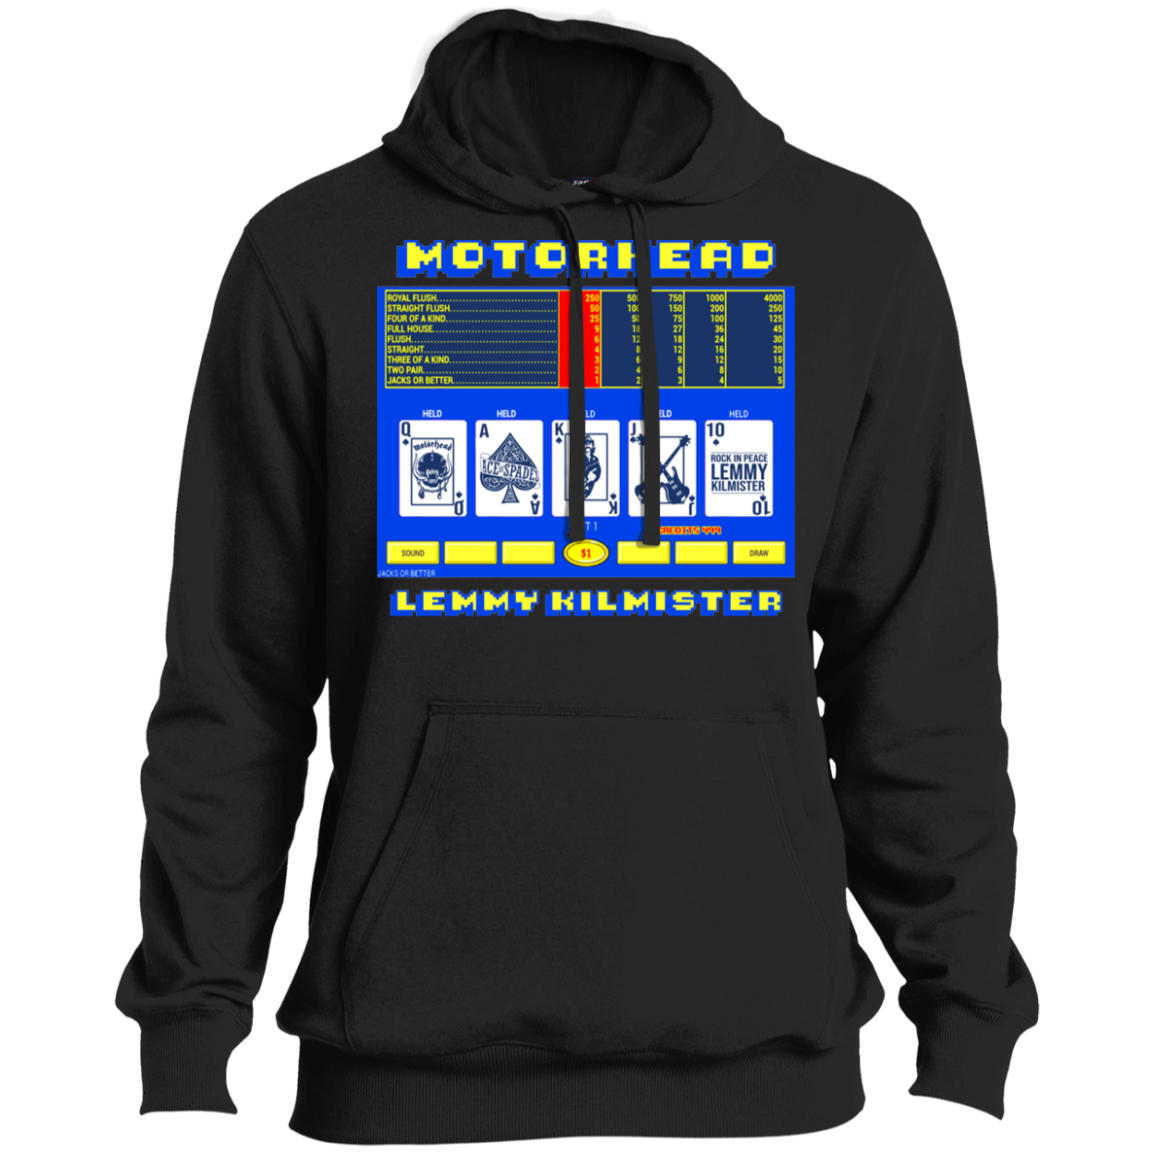 ArtichokeUSA Custom Design. Motorhead's Lemmy Kilmister's Favorite Video Poker Machine. Rock in Peace! Ultra Soft Pullover Hoodie